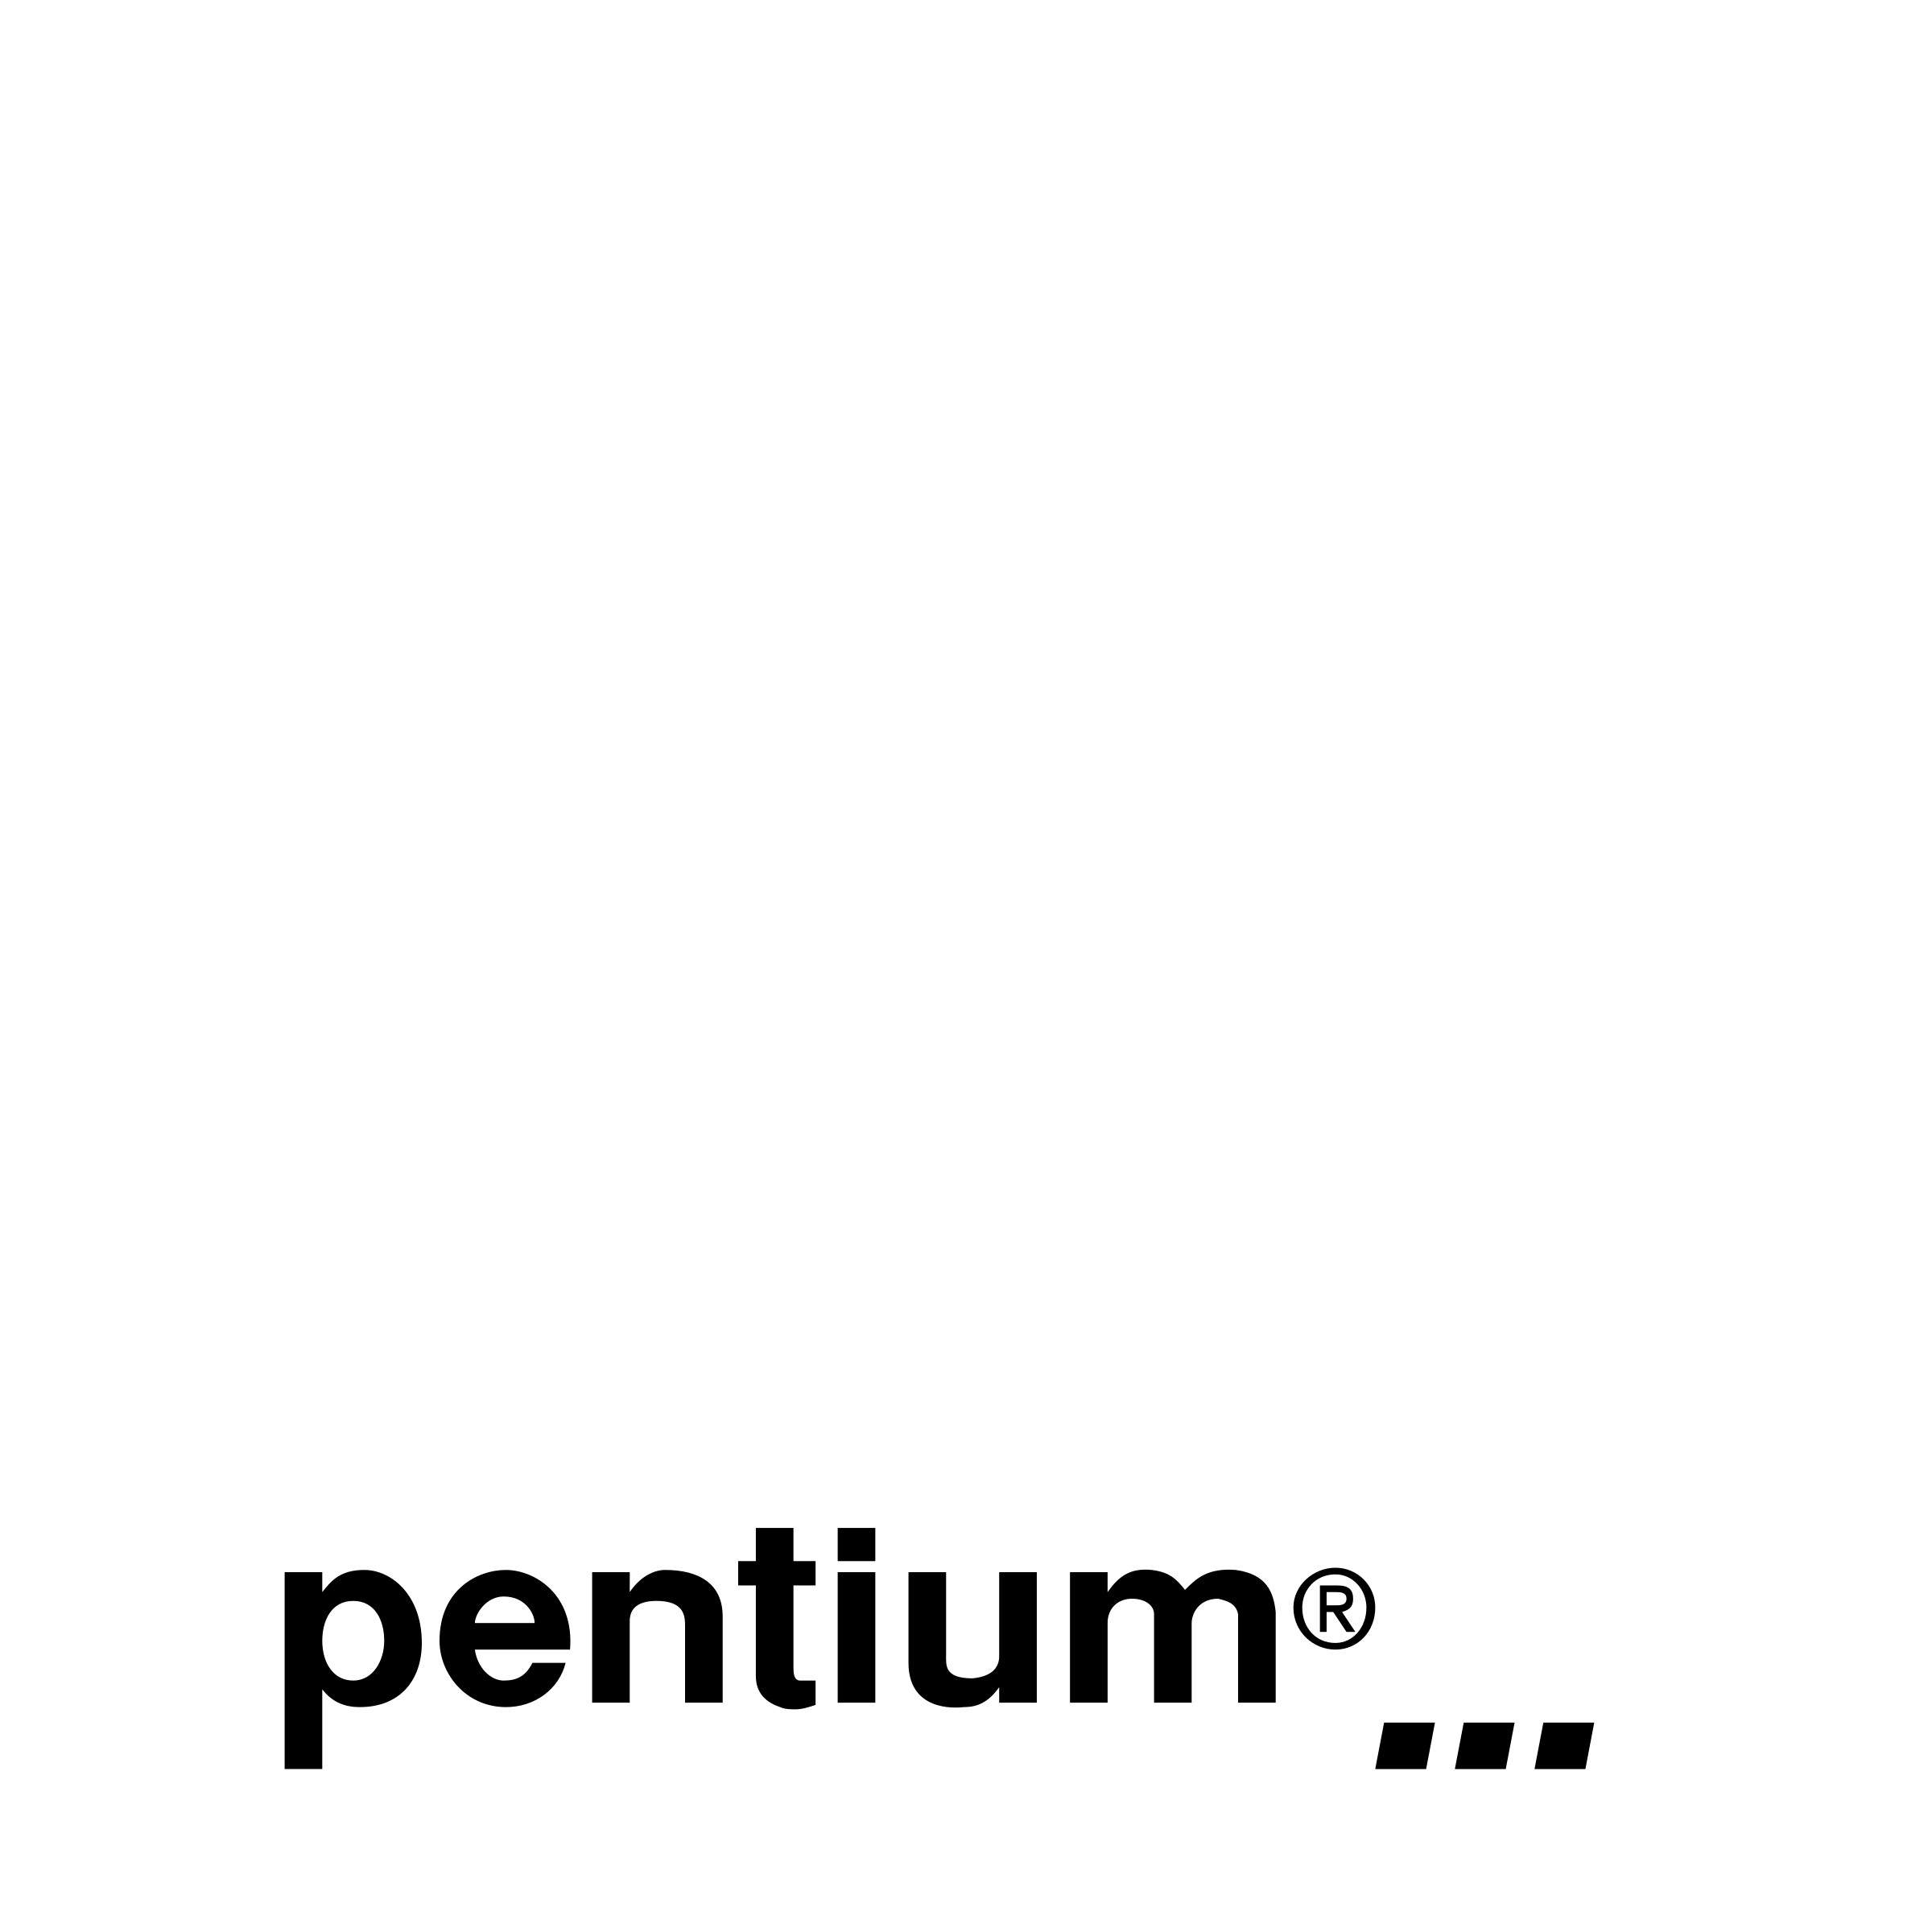 Processor Logo - Pentium III Processor Logo PNG Transparent & SVG Vector - Freebie Supply